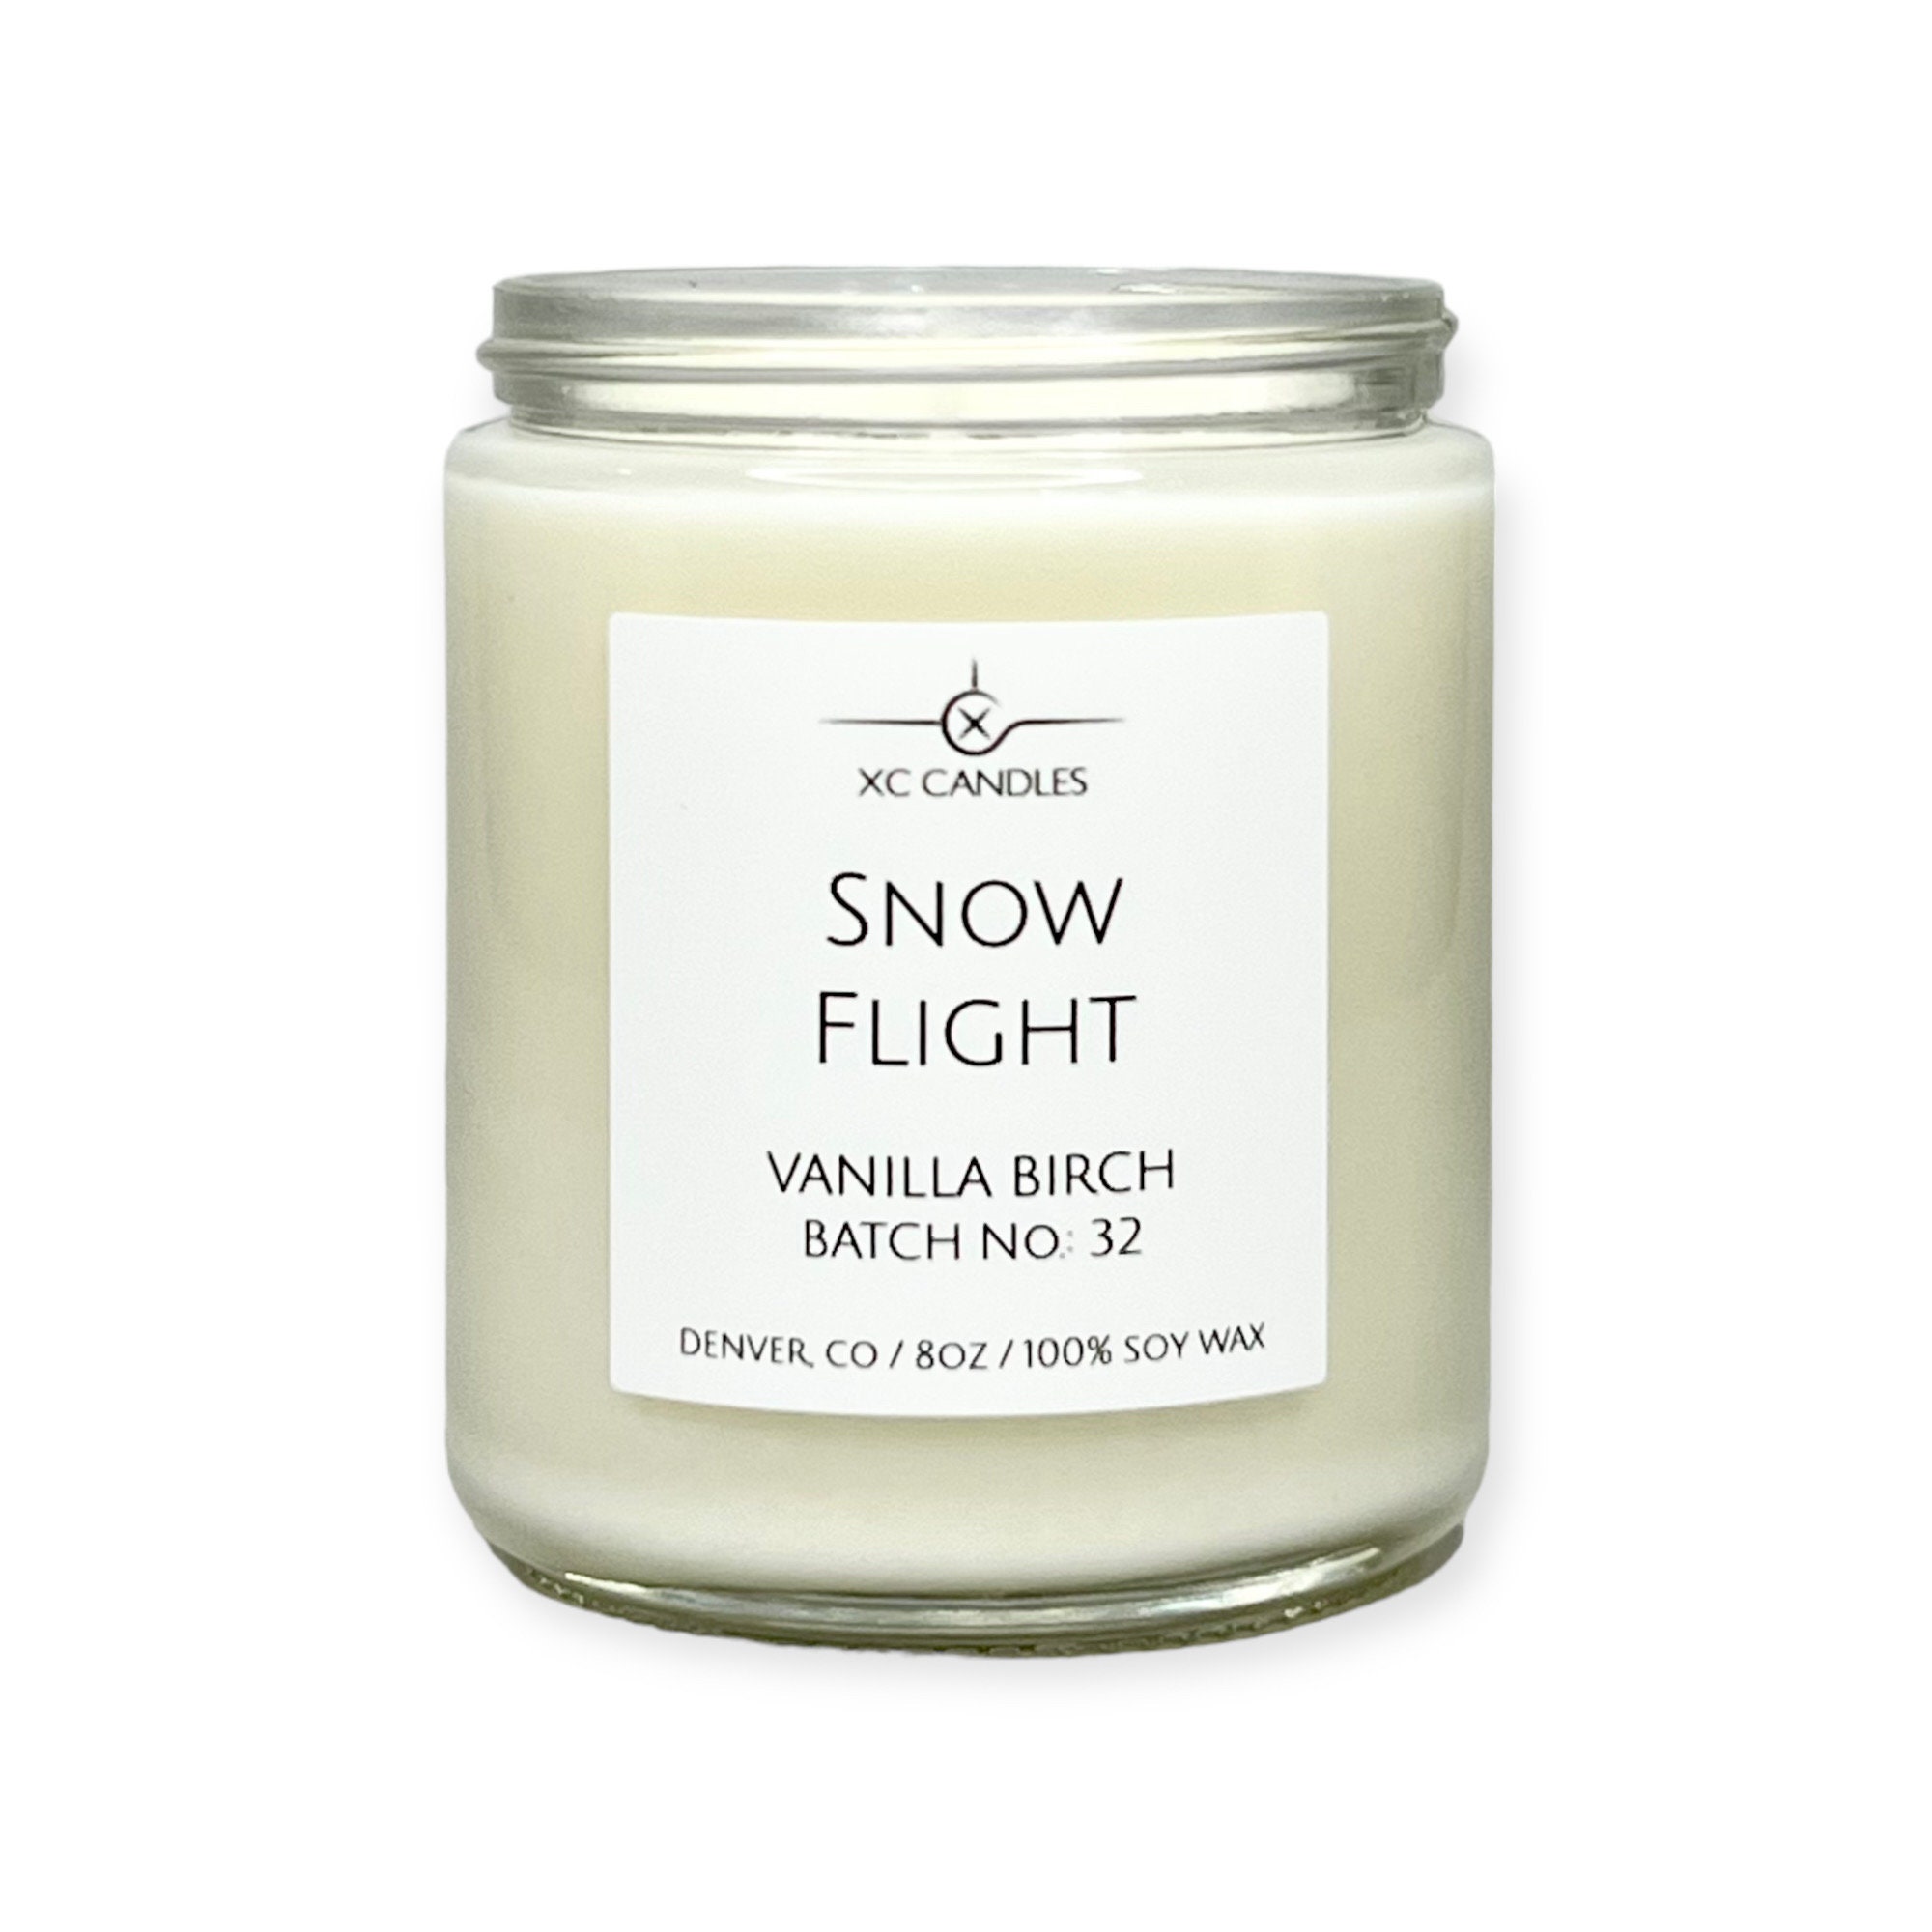 Vanilla Birch Wax Melts